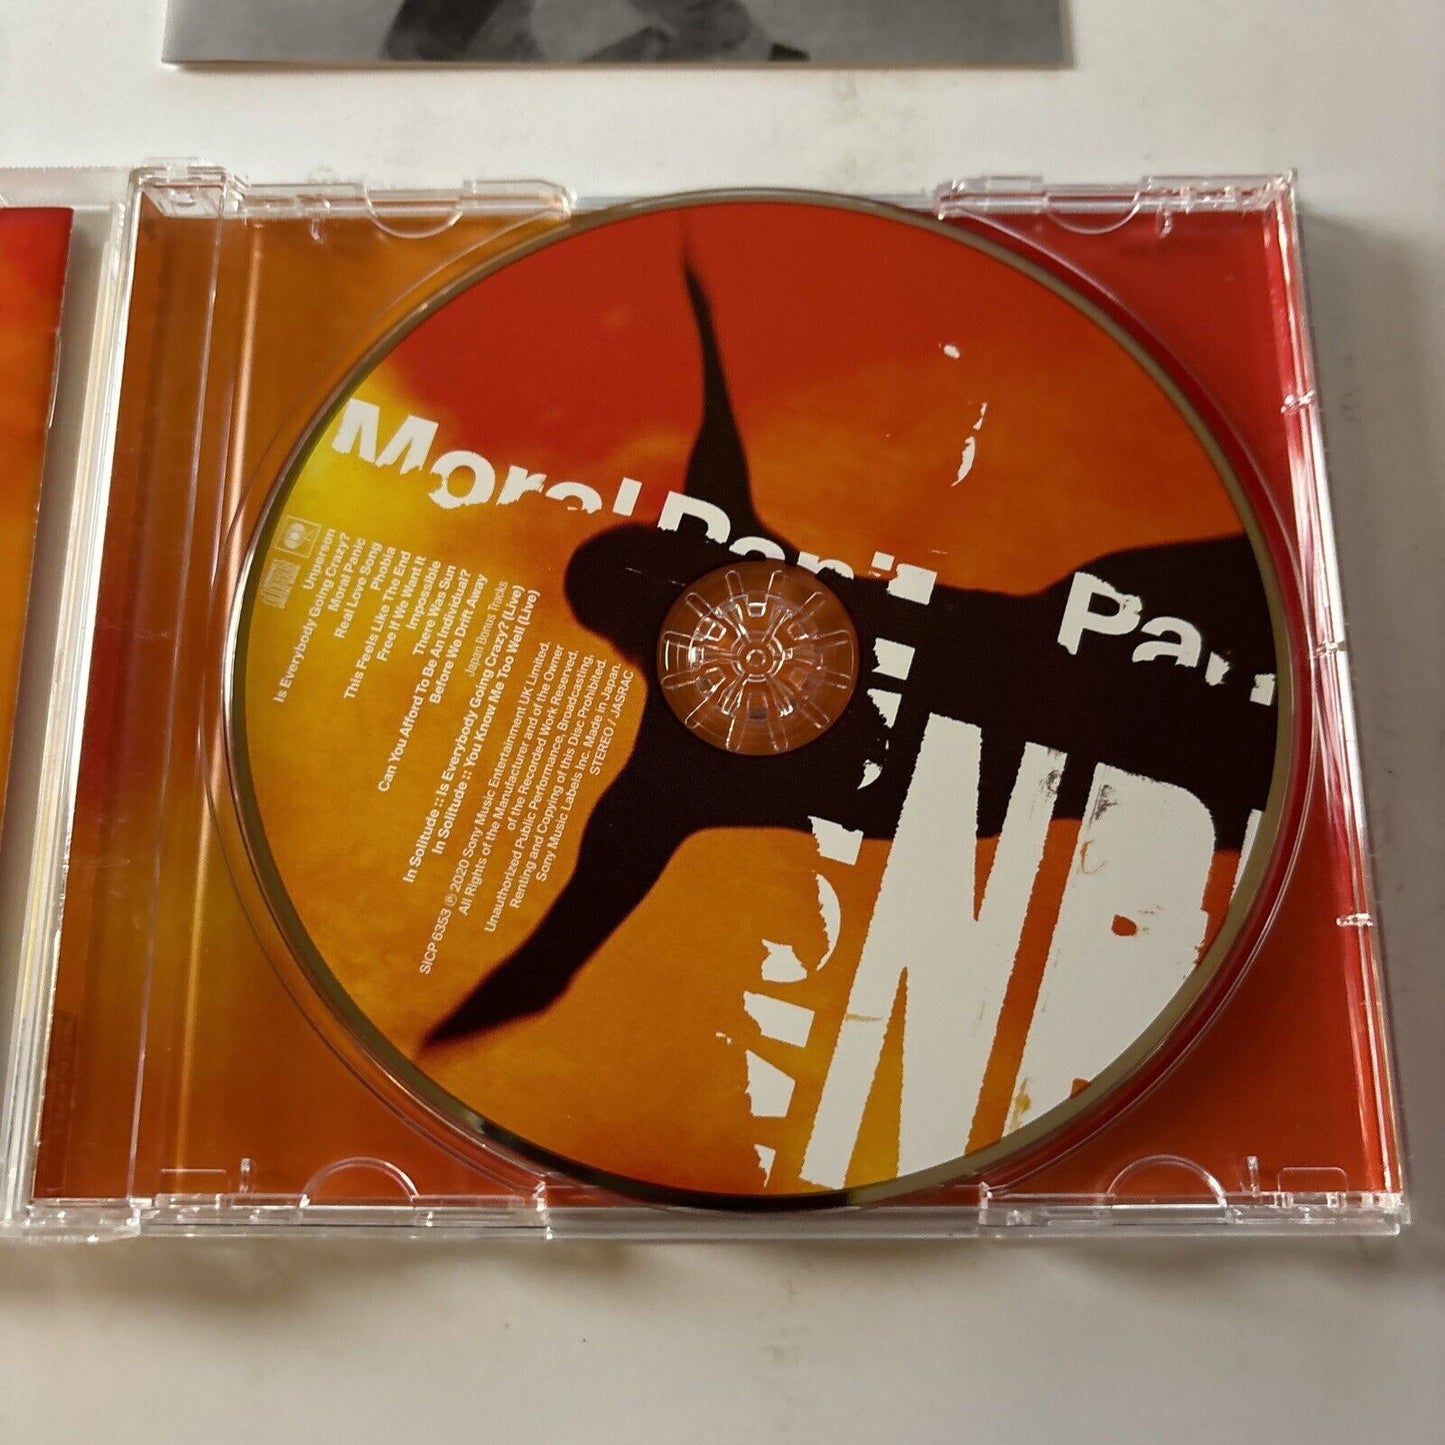 Nothing But Thieves - Moral Panic [Japan Bonus Track] (CD, 2020) Sicp-6353 Japan